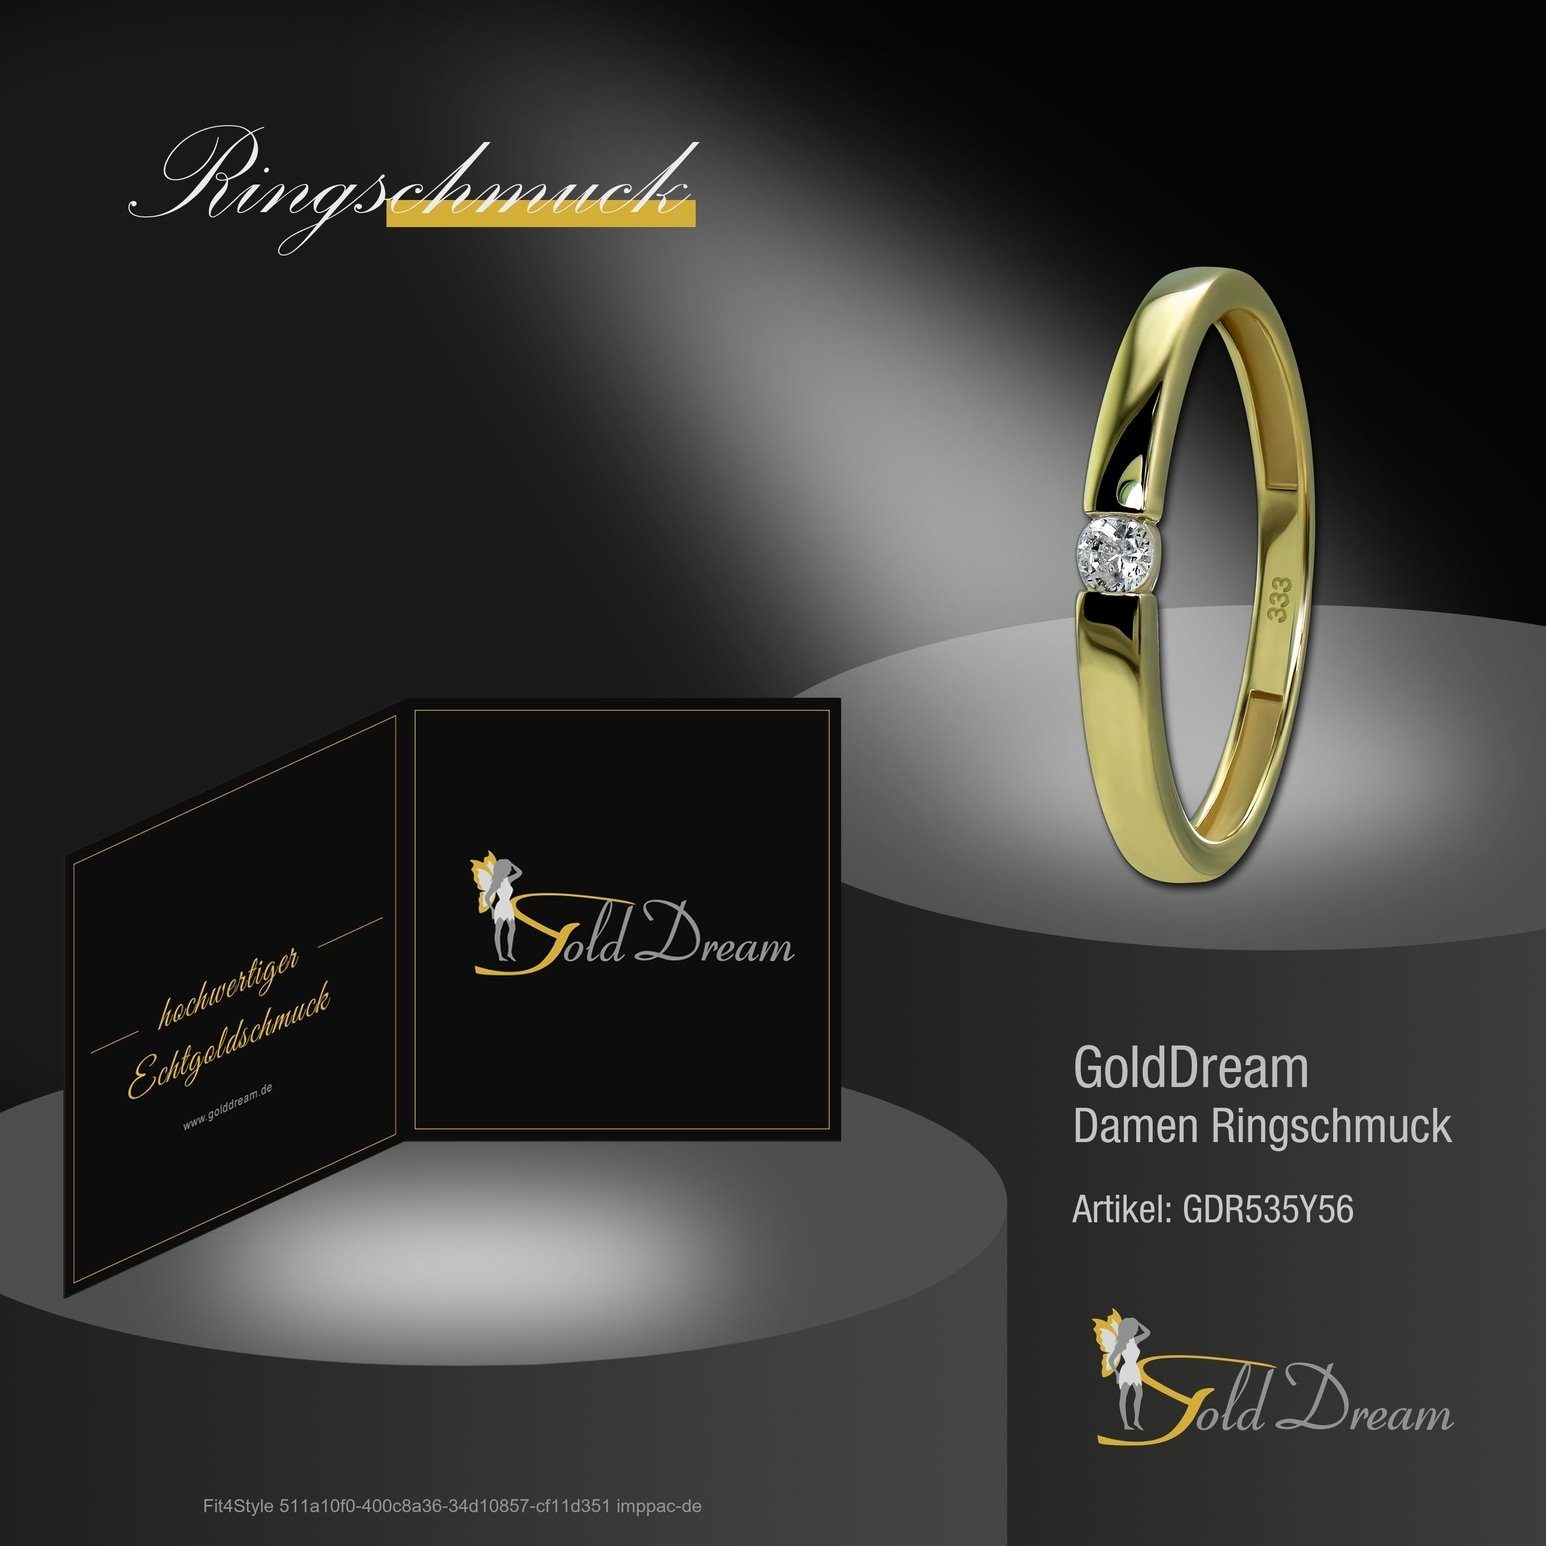 Gelbgold (Fingerring), gold, GoldDream Ring Damen 333 8 Gold Classic Ring - Karat, weiß Gr.56 Classic Goldring GoldDream Farbe: